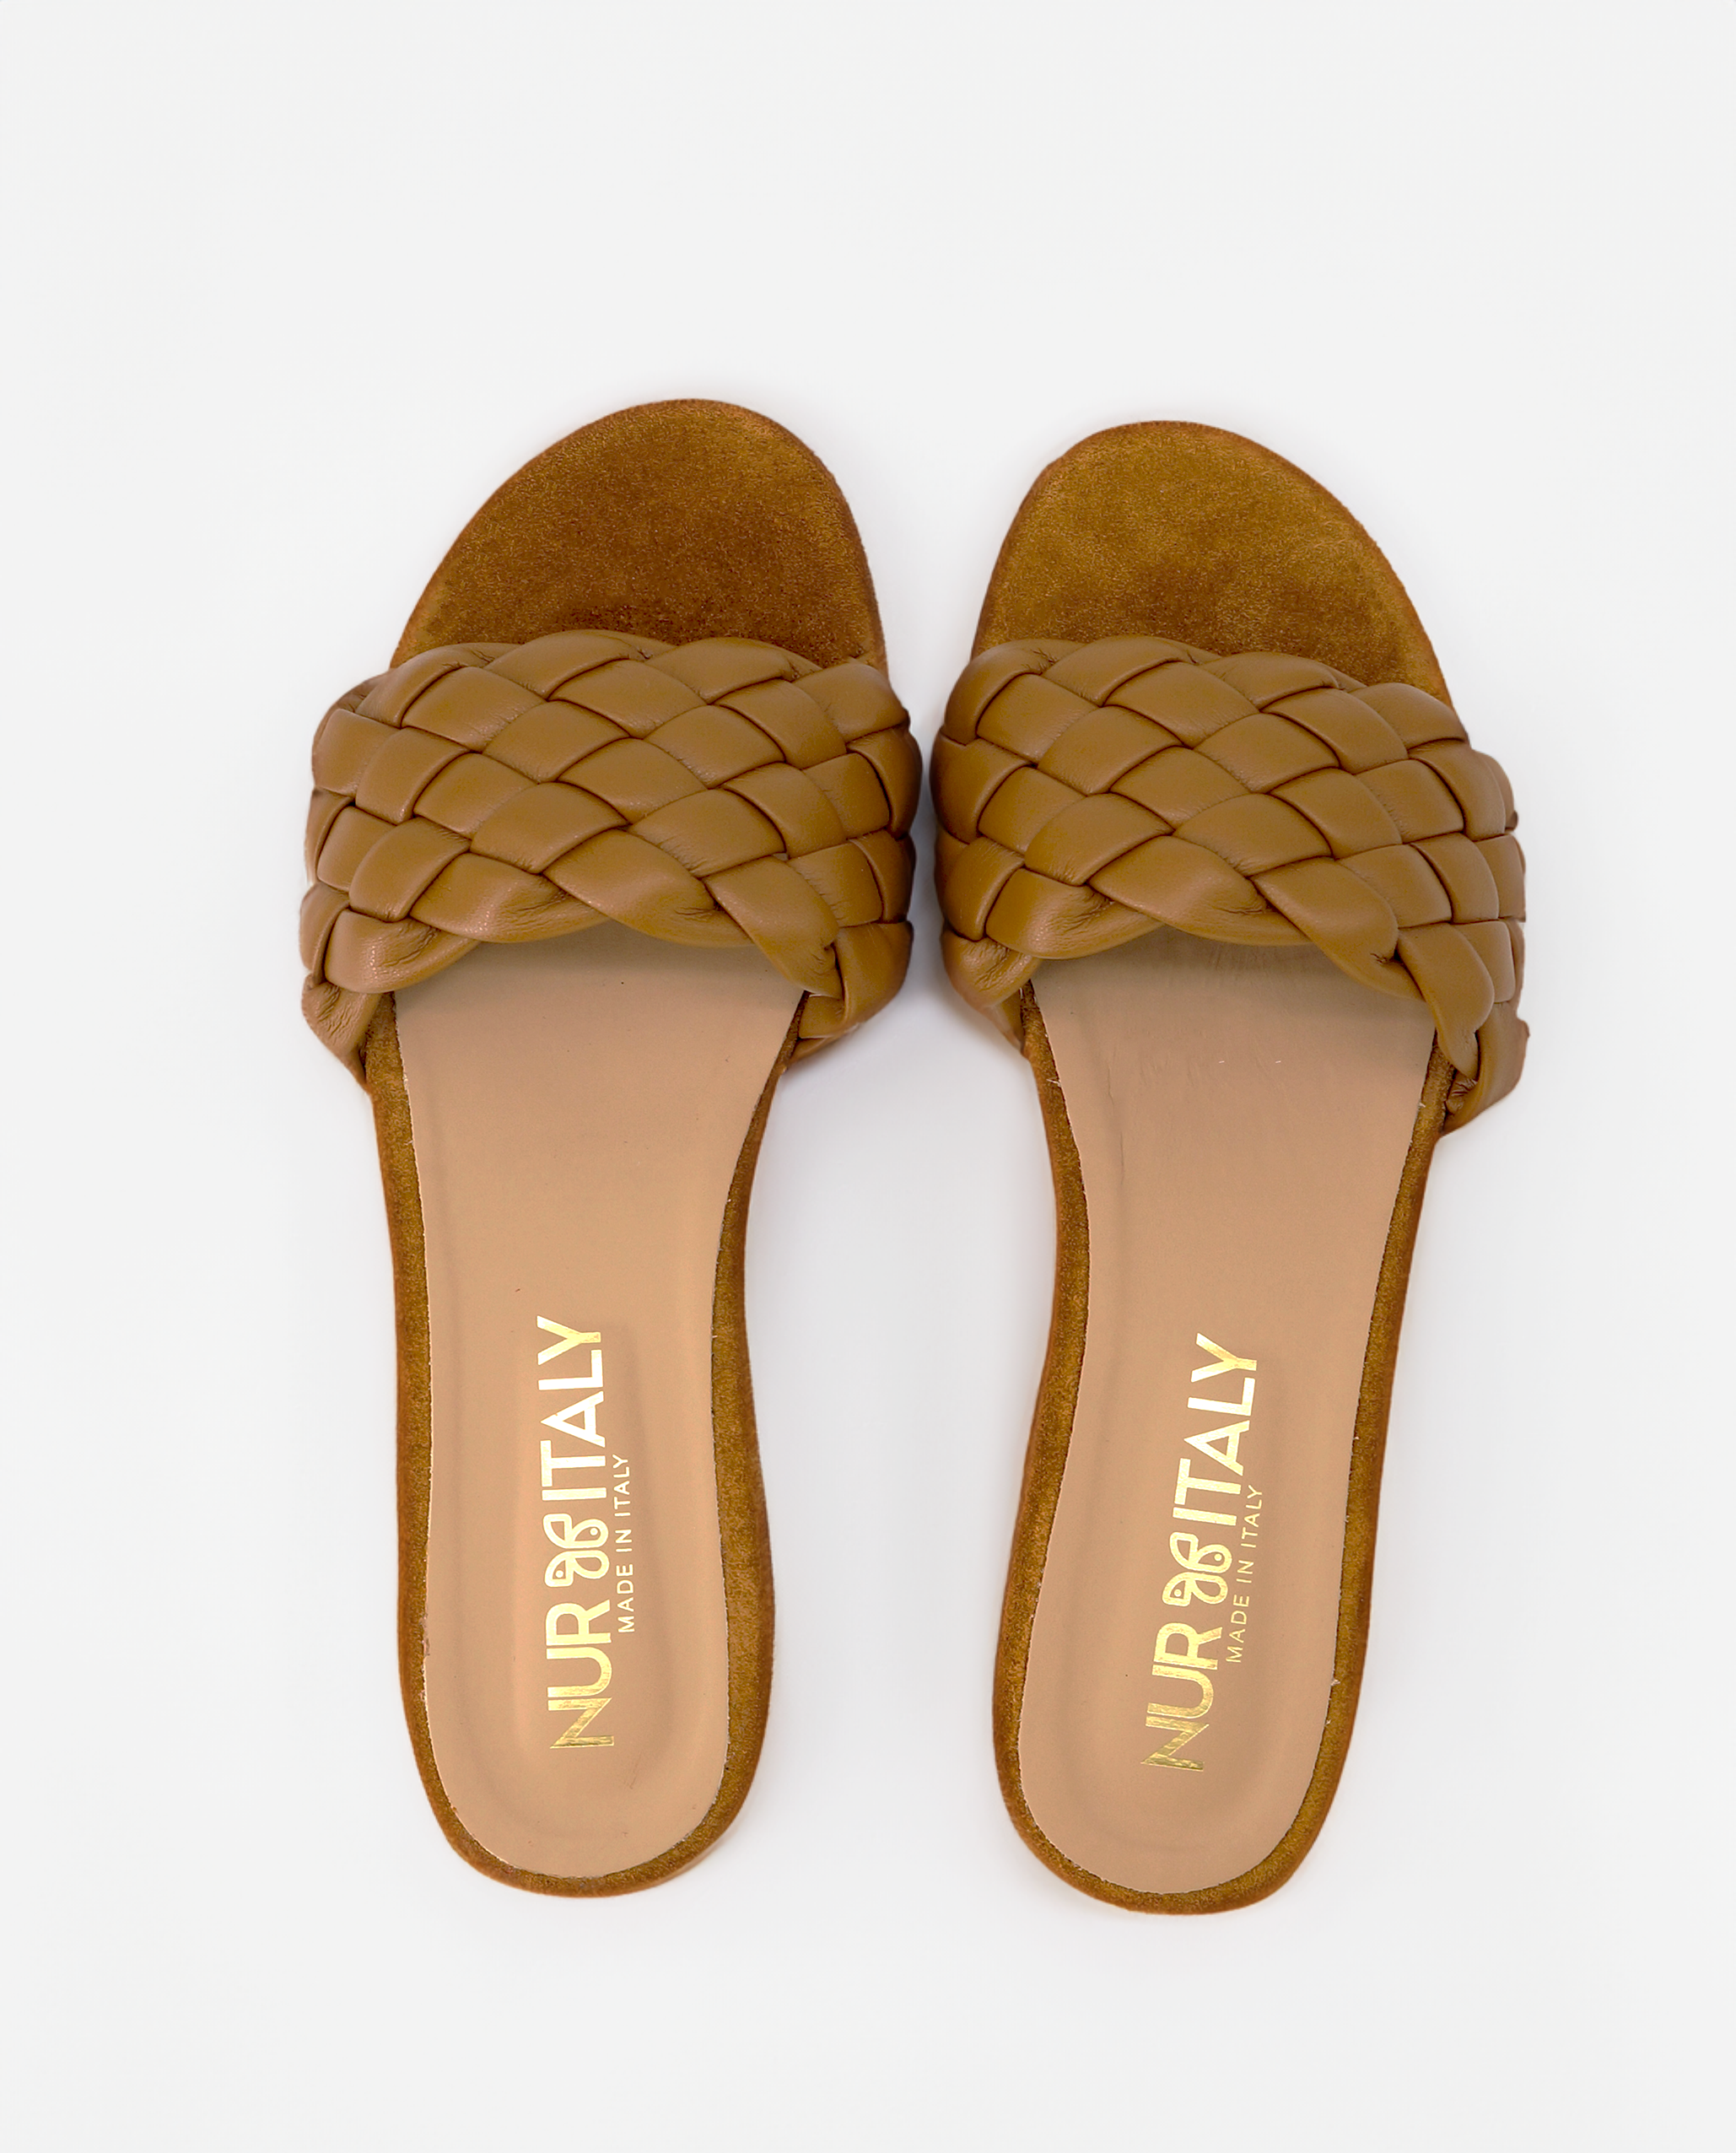 NUR ITALY Serafina Braided Italian Leather Sandal, Main, color, TAN #color_palermo tan